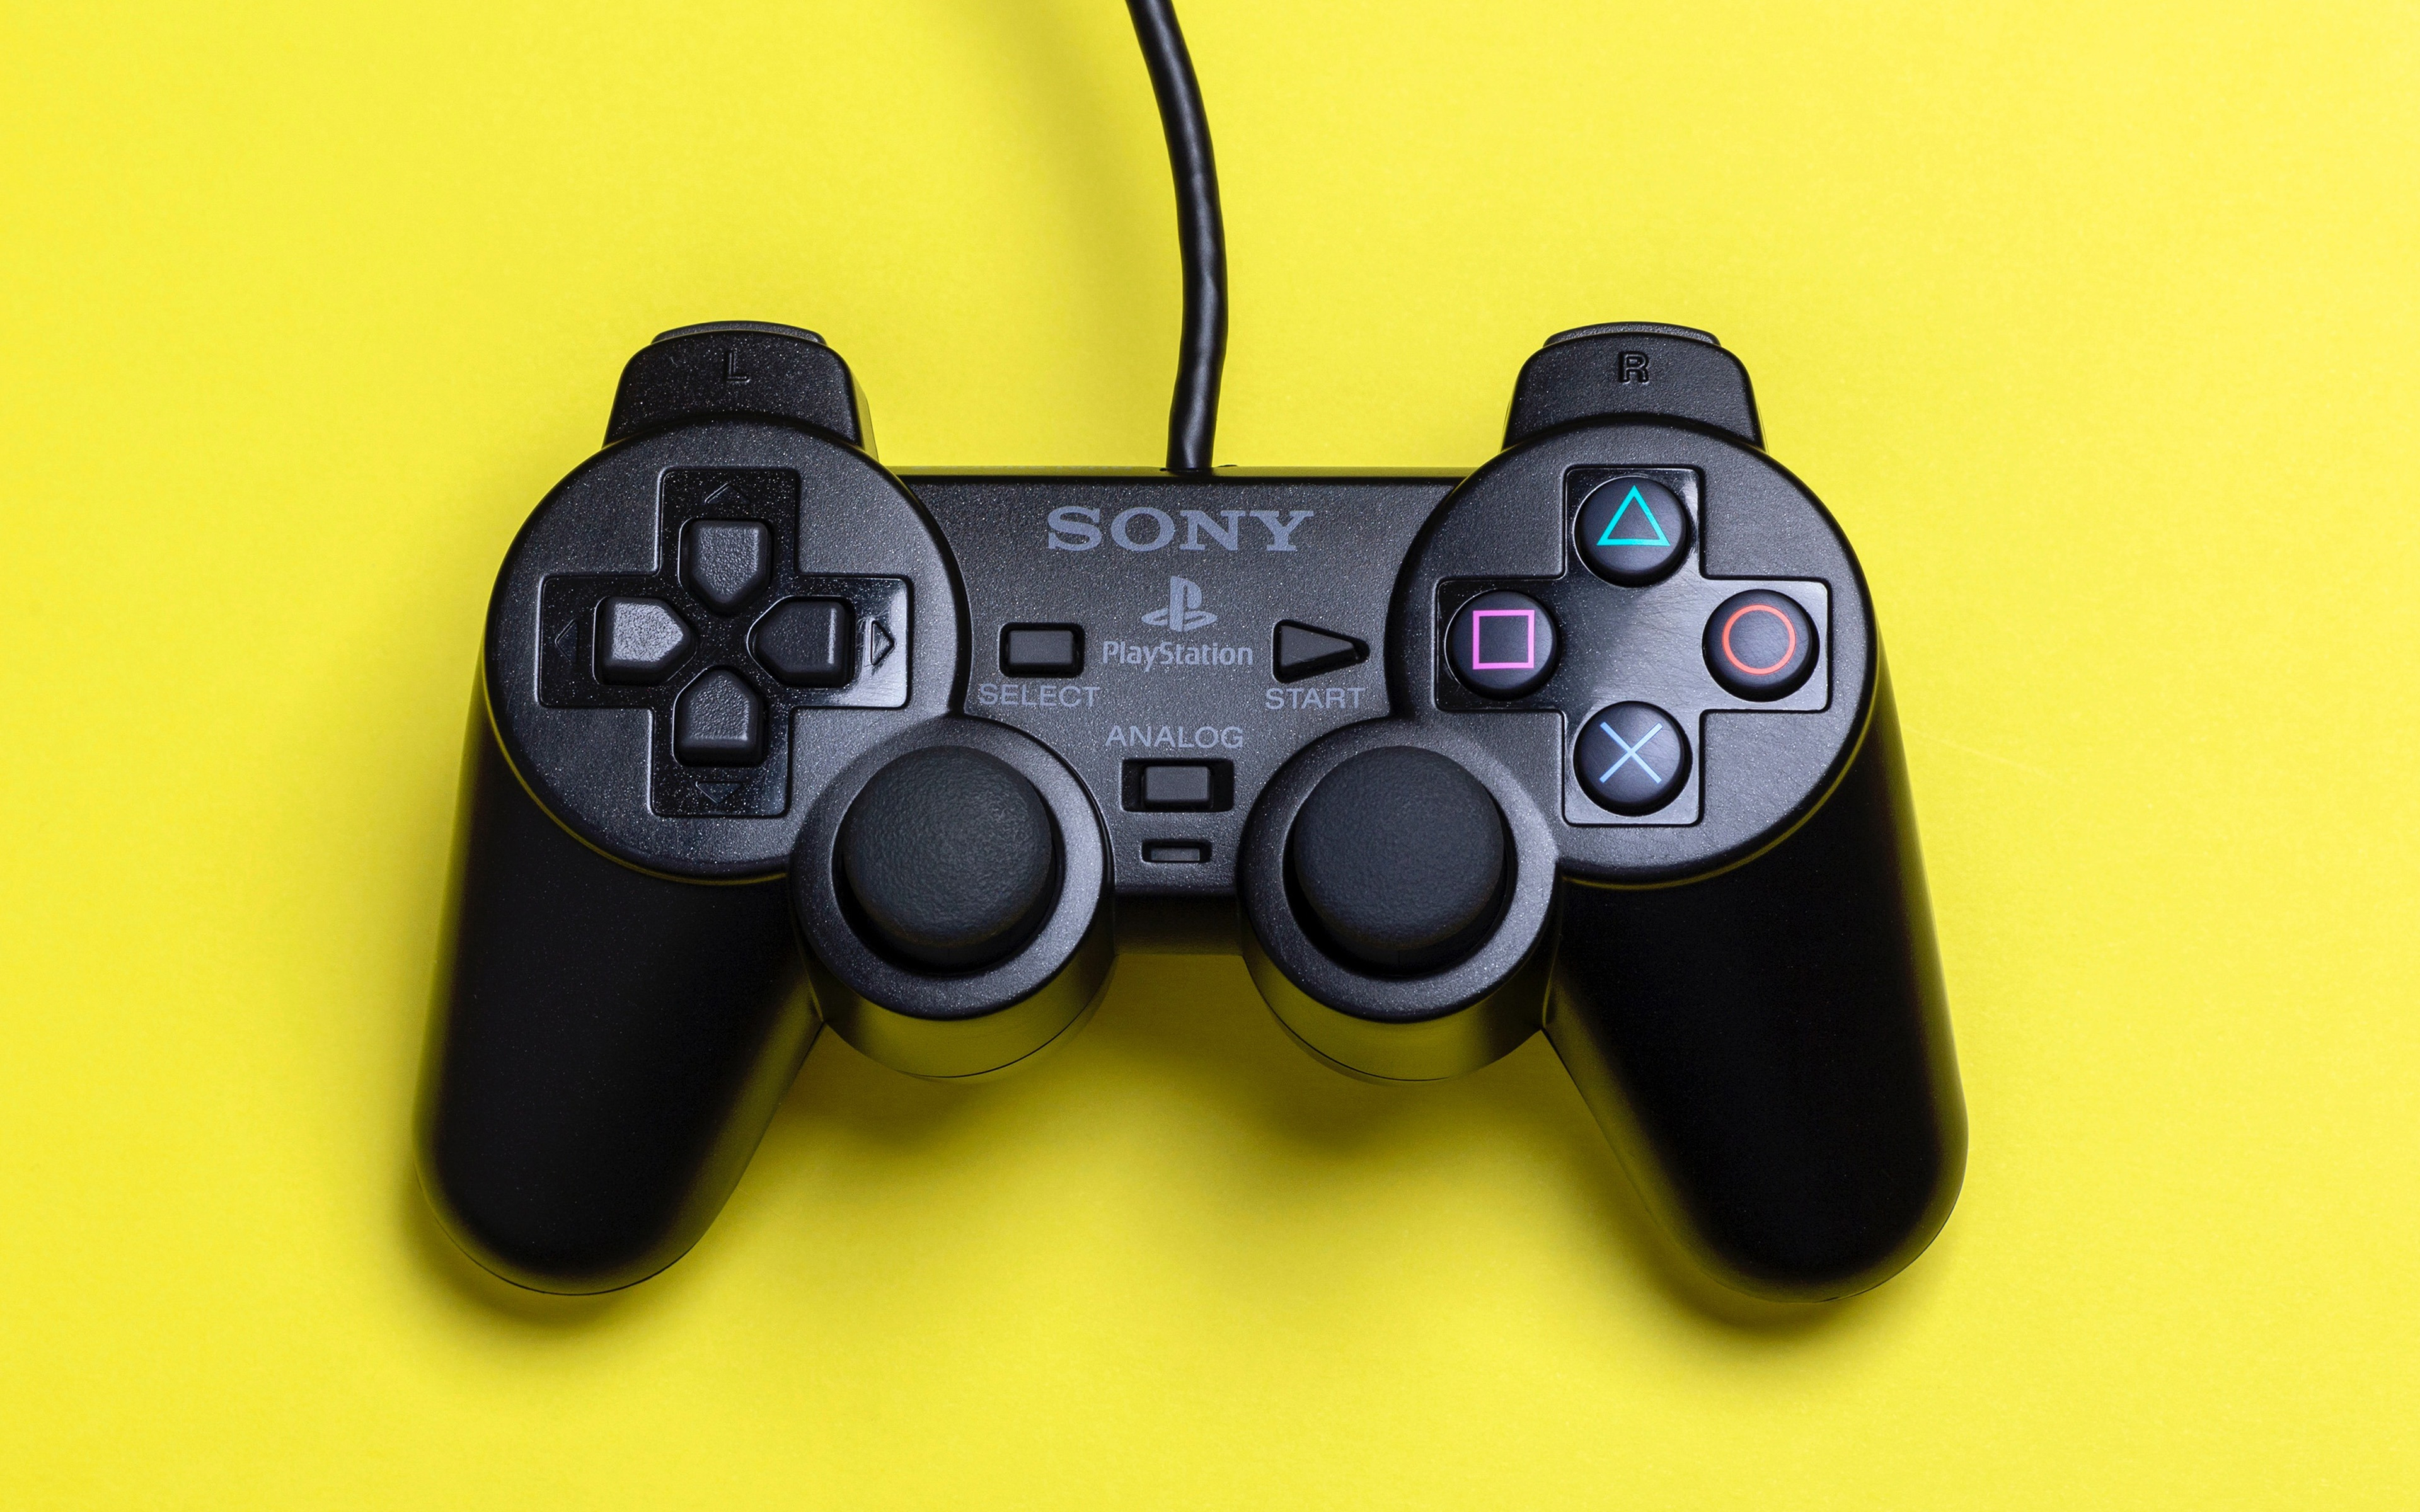 PlayStation joystick on yellow background